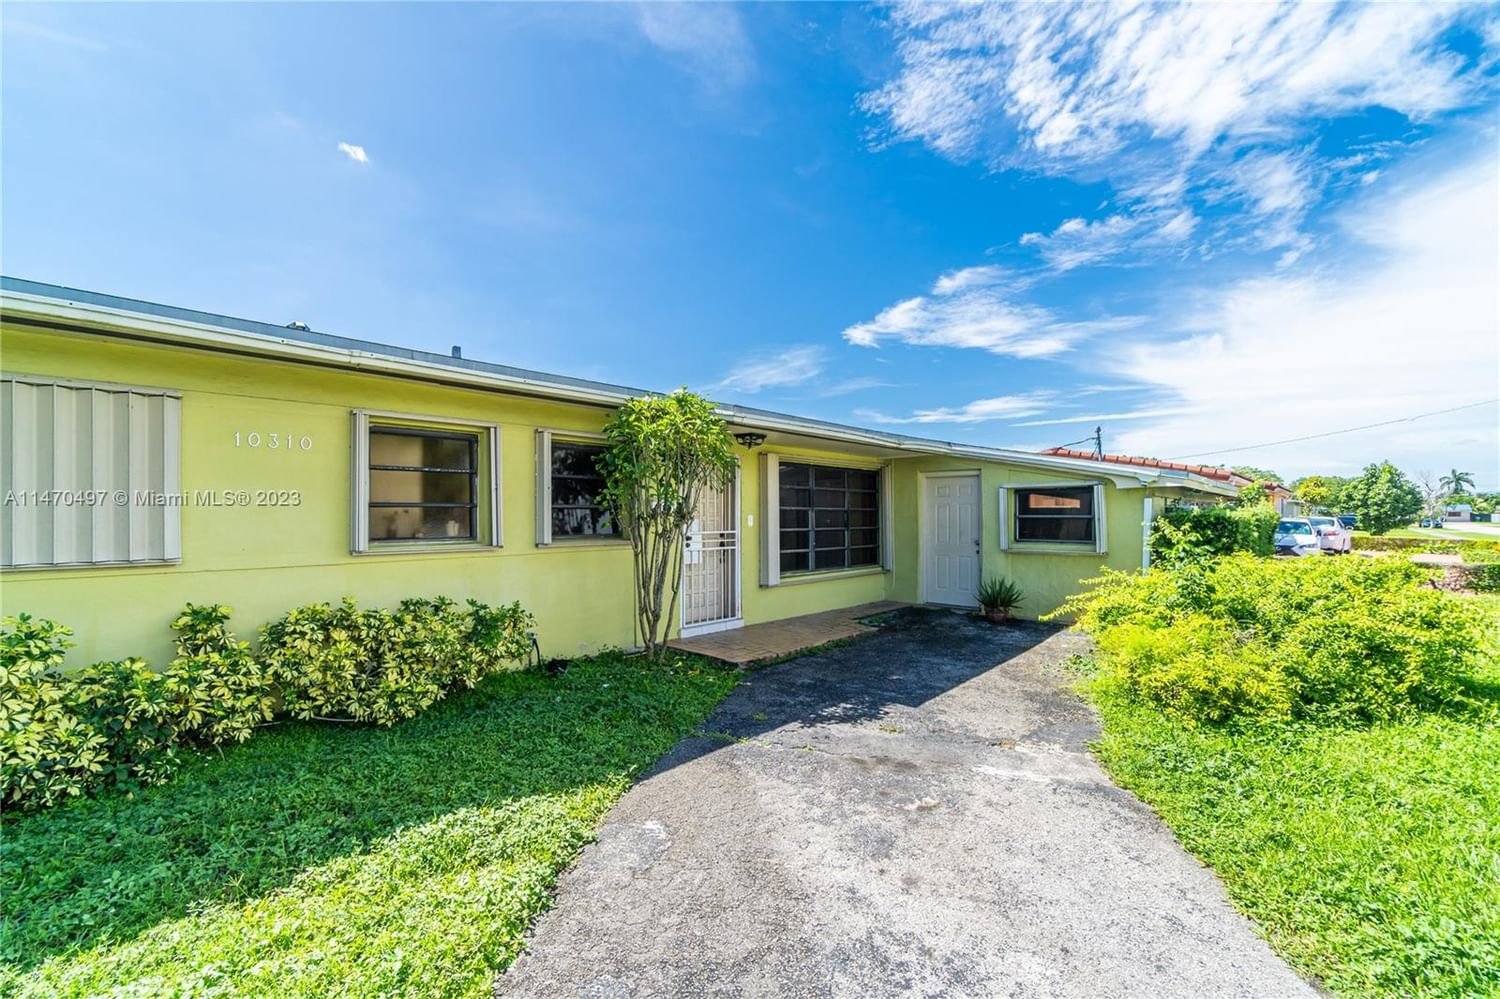 Real estate property located at 10310 45th St, Miami-Dade County, Miami, FL